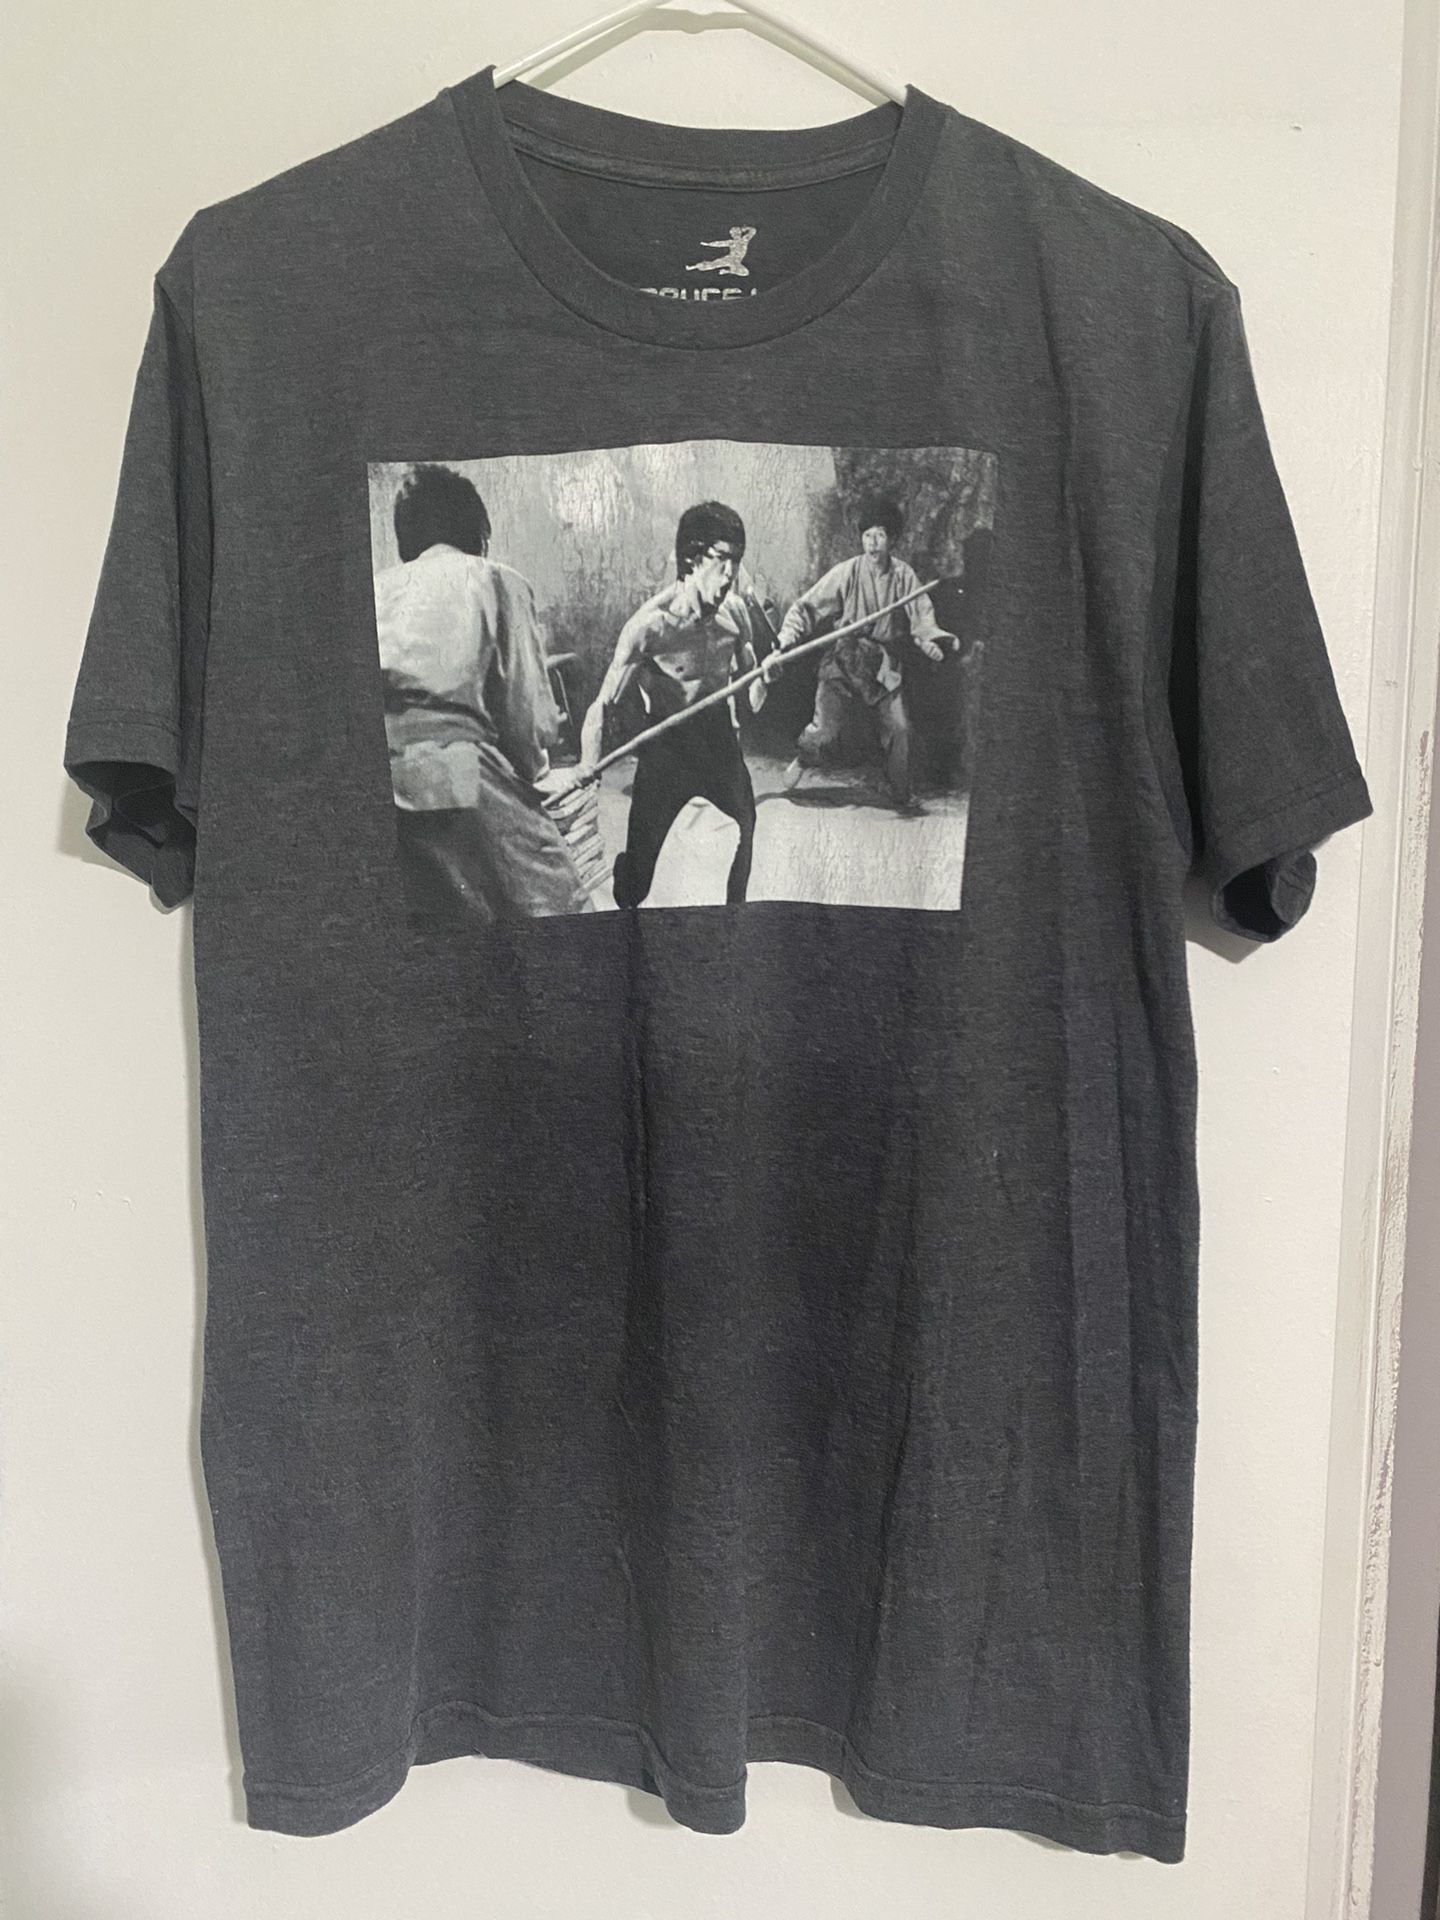 Bruce Lee Tee Shirt Size M